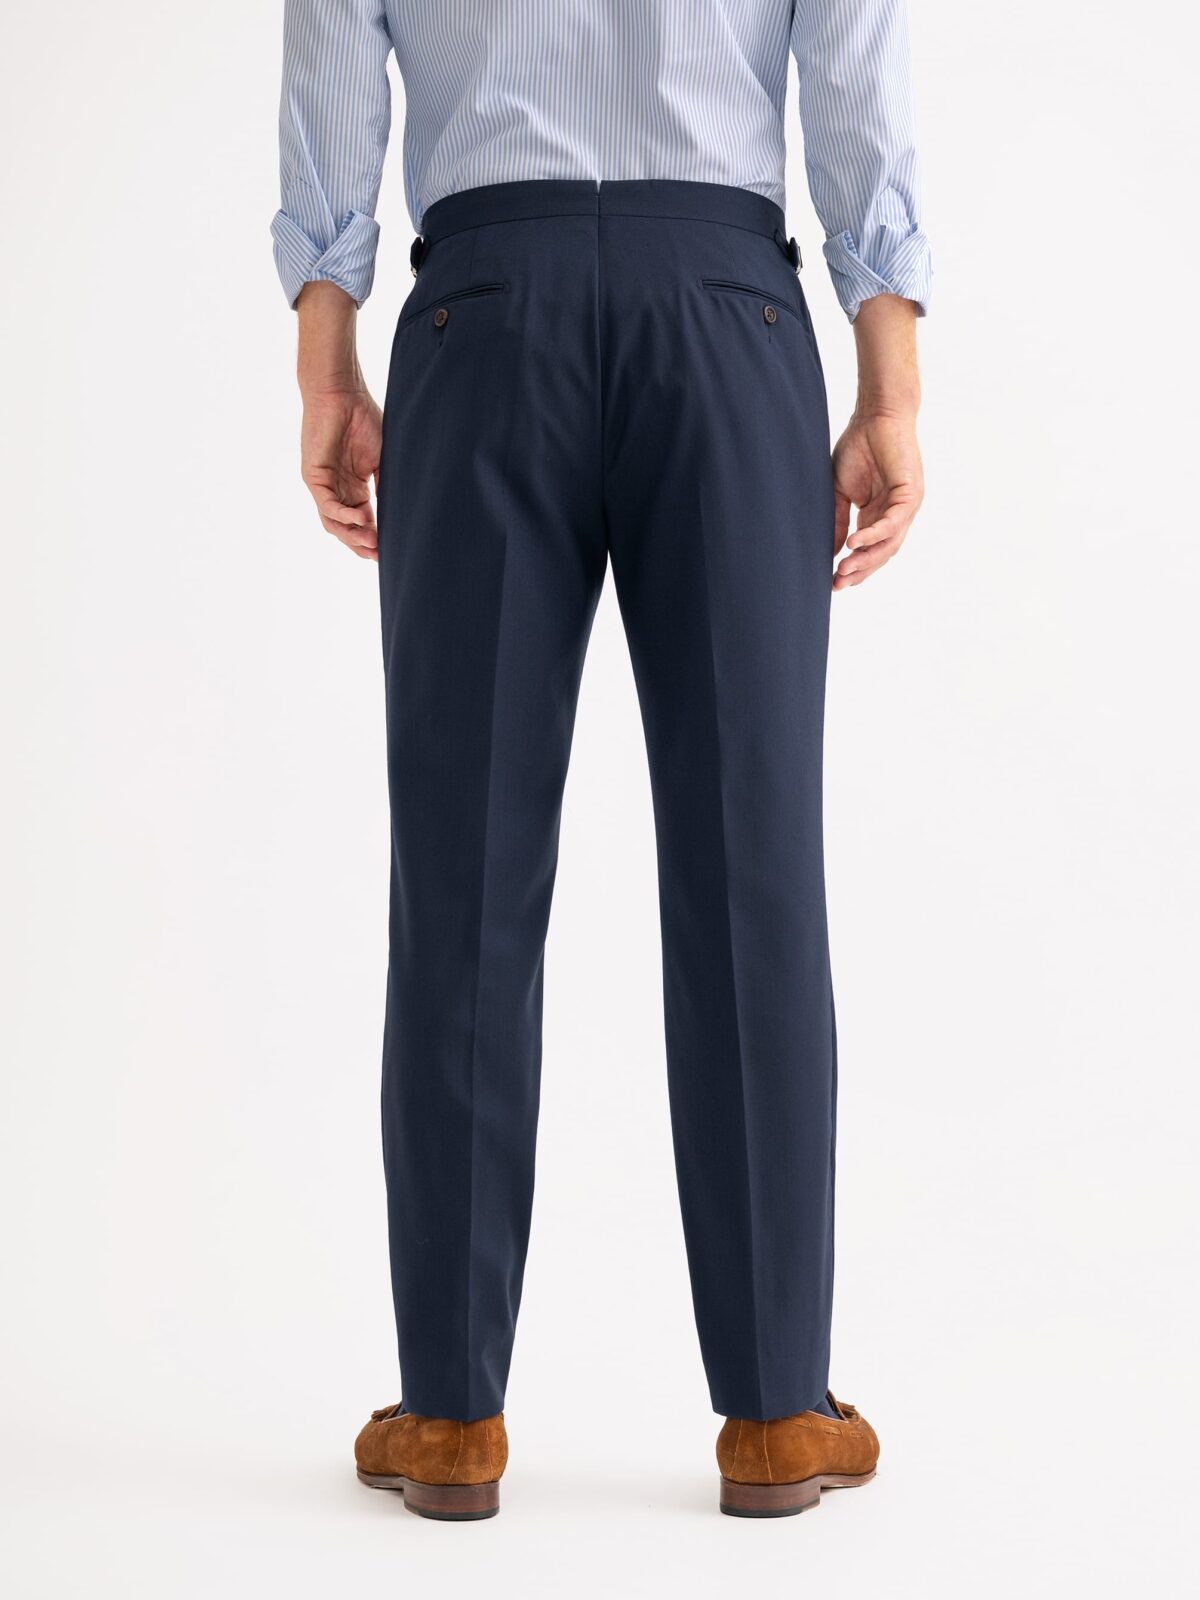 Men's Blue Trousers | Navy & Light Blue Trousers | Moss